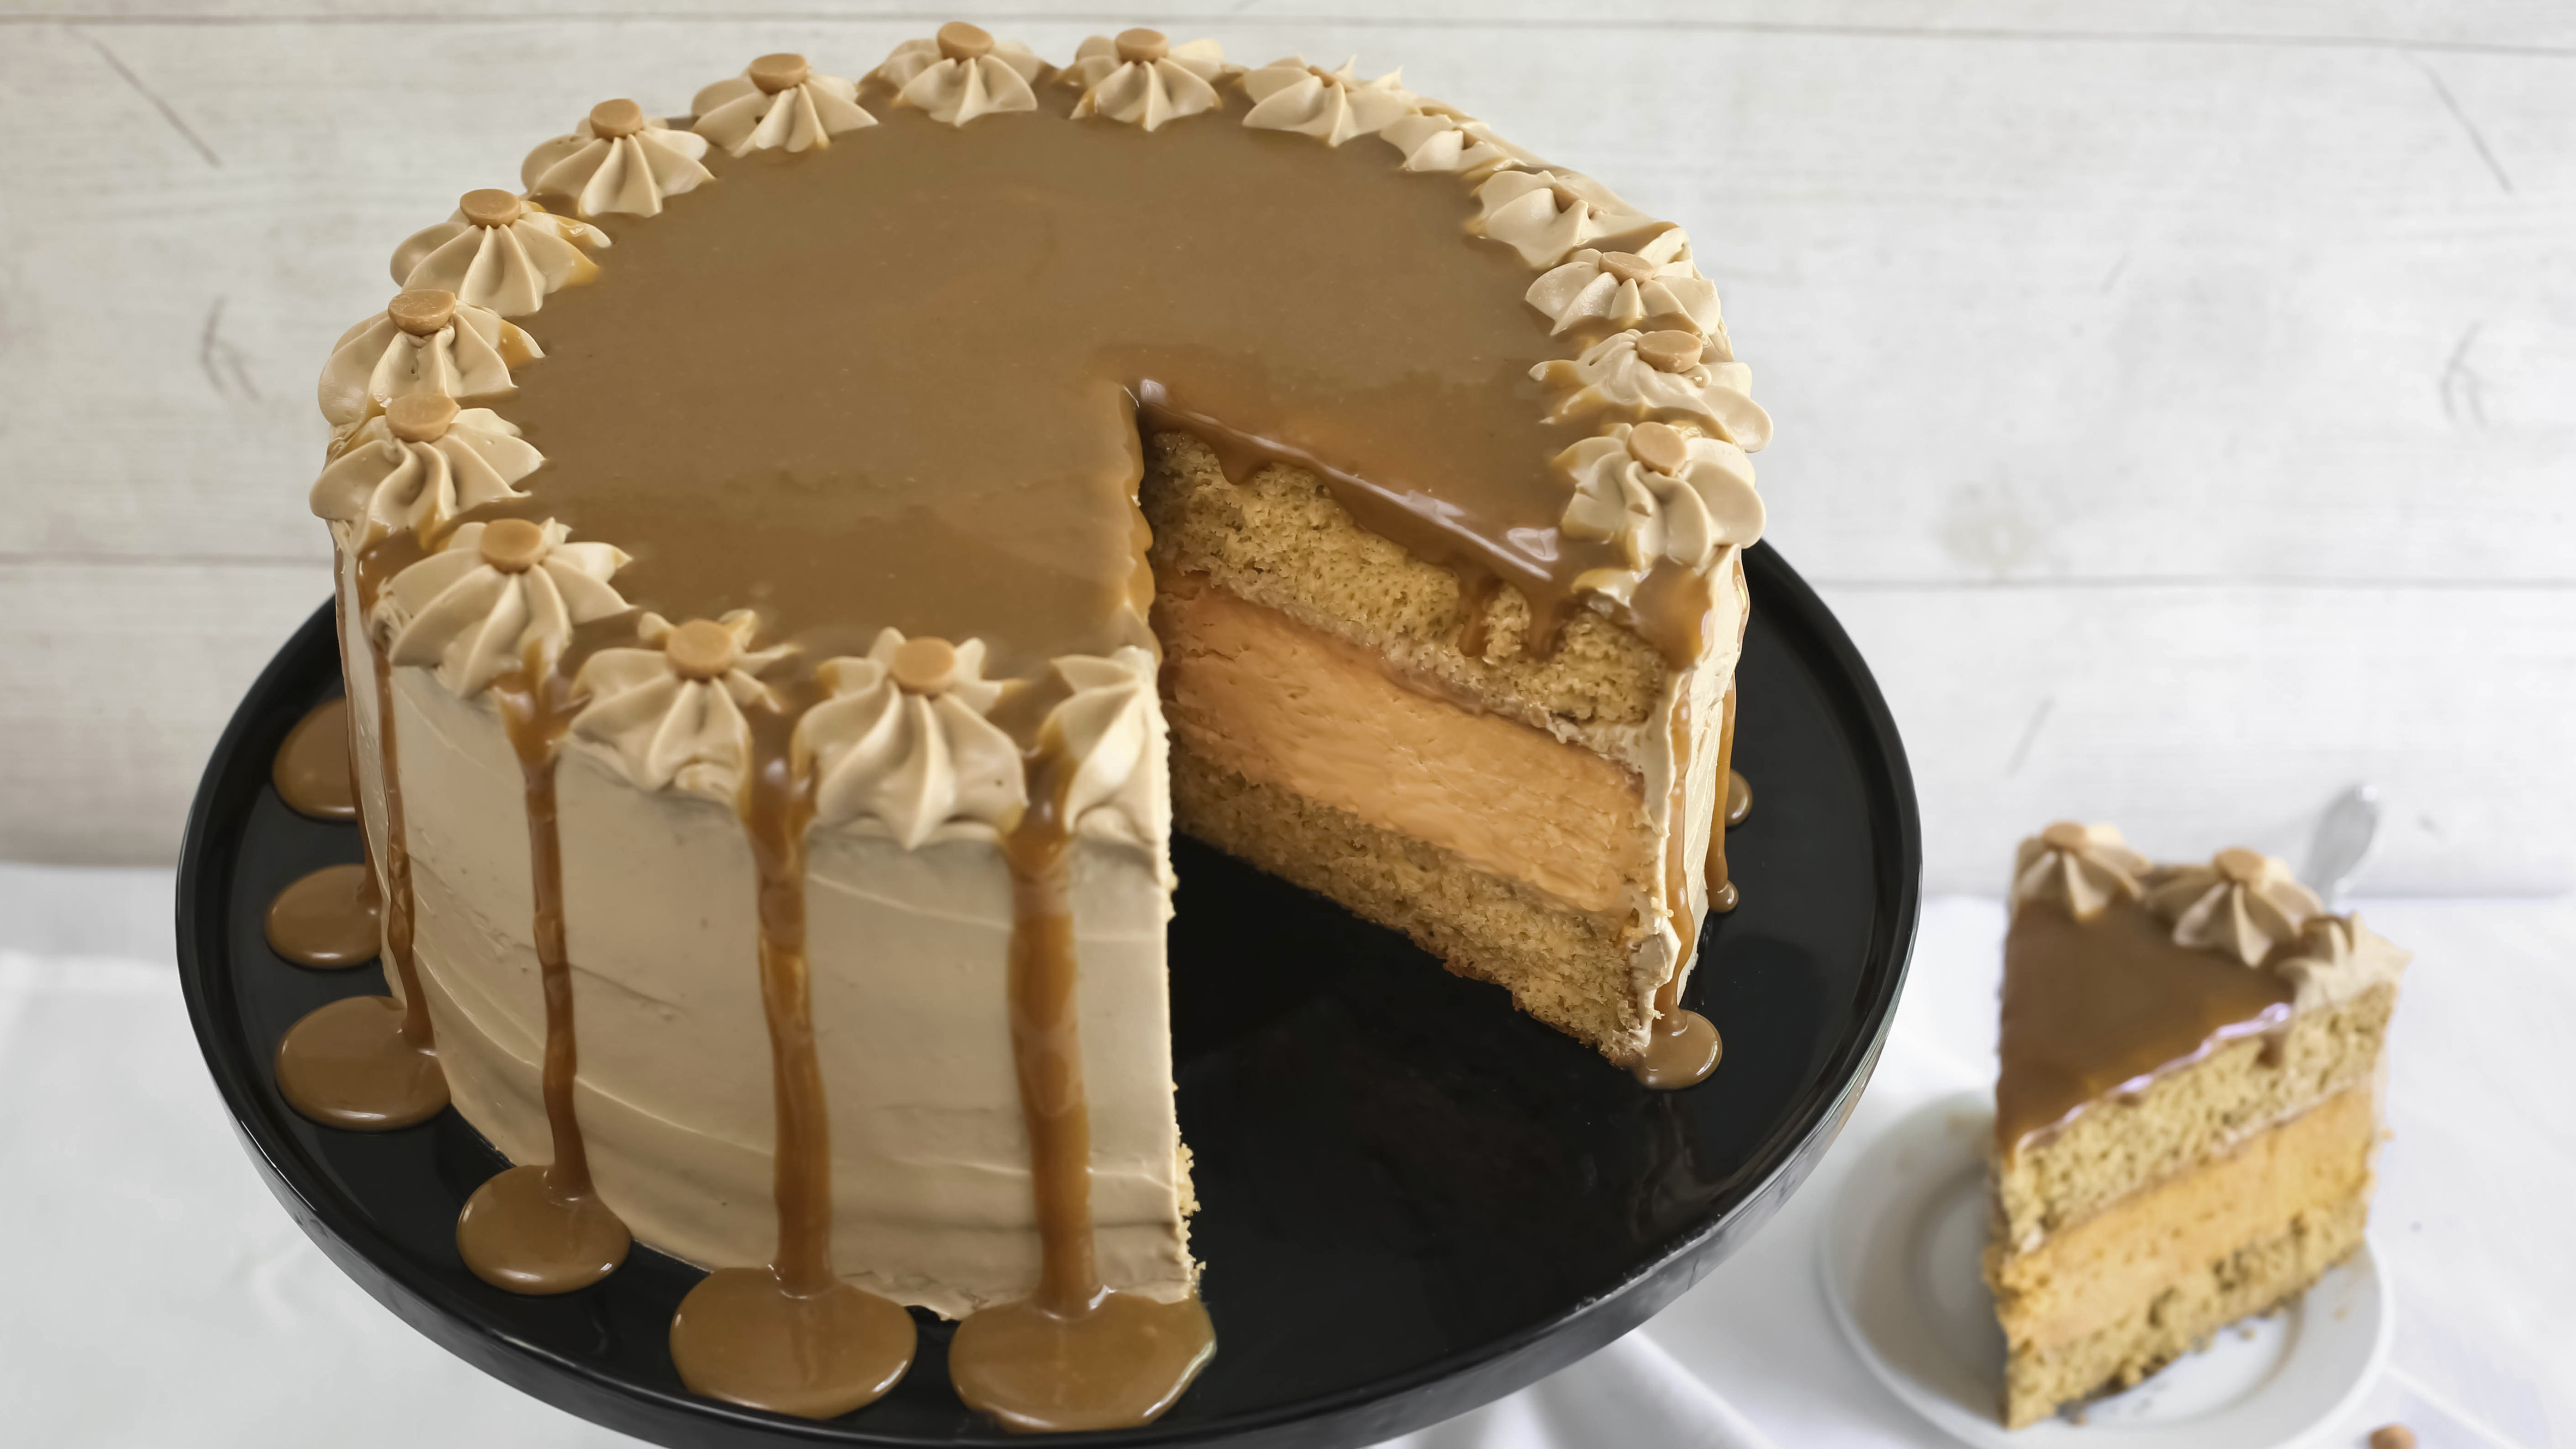 Buy/Send Eggless 2 Tier Butterscotch Cake Online @ Rs. 3779 - SendBestGift